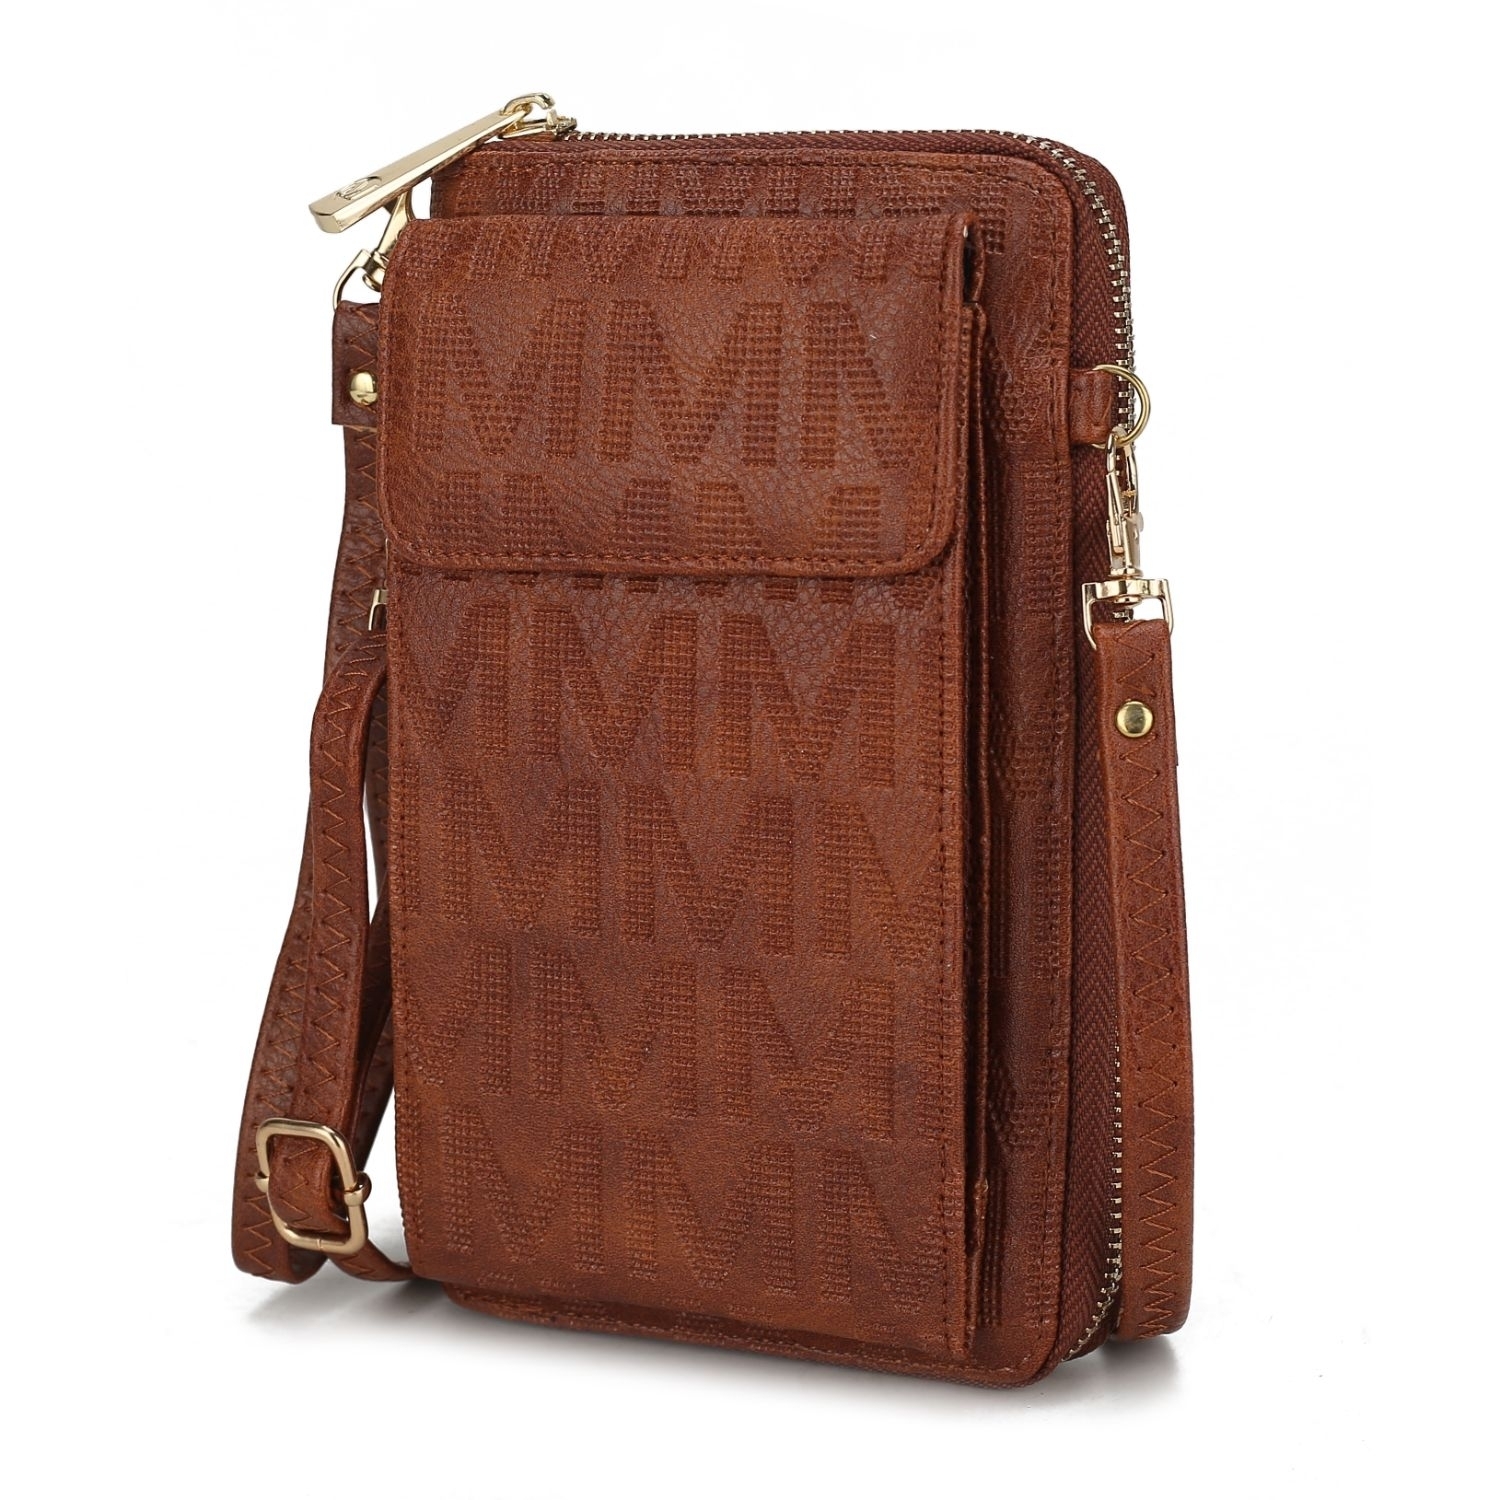 MKF Collection Caddy Phone Wallet Crossbody Handbag By Mia K - Camel